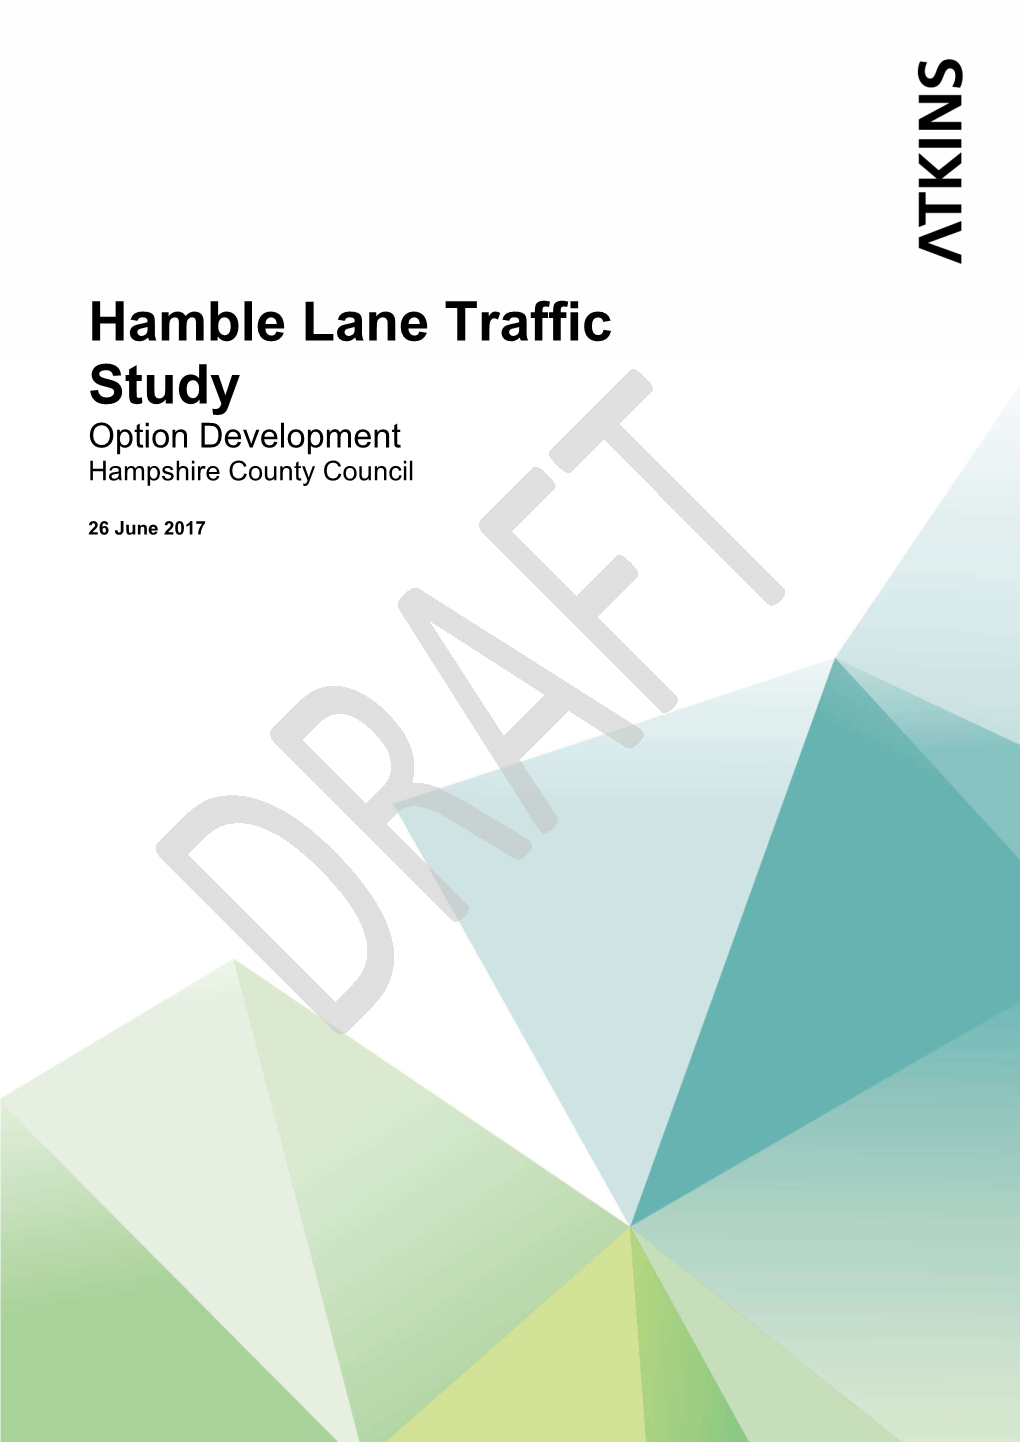 The Hamble Lane Traffic Study Report